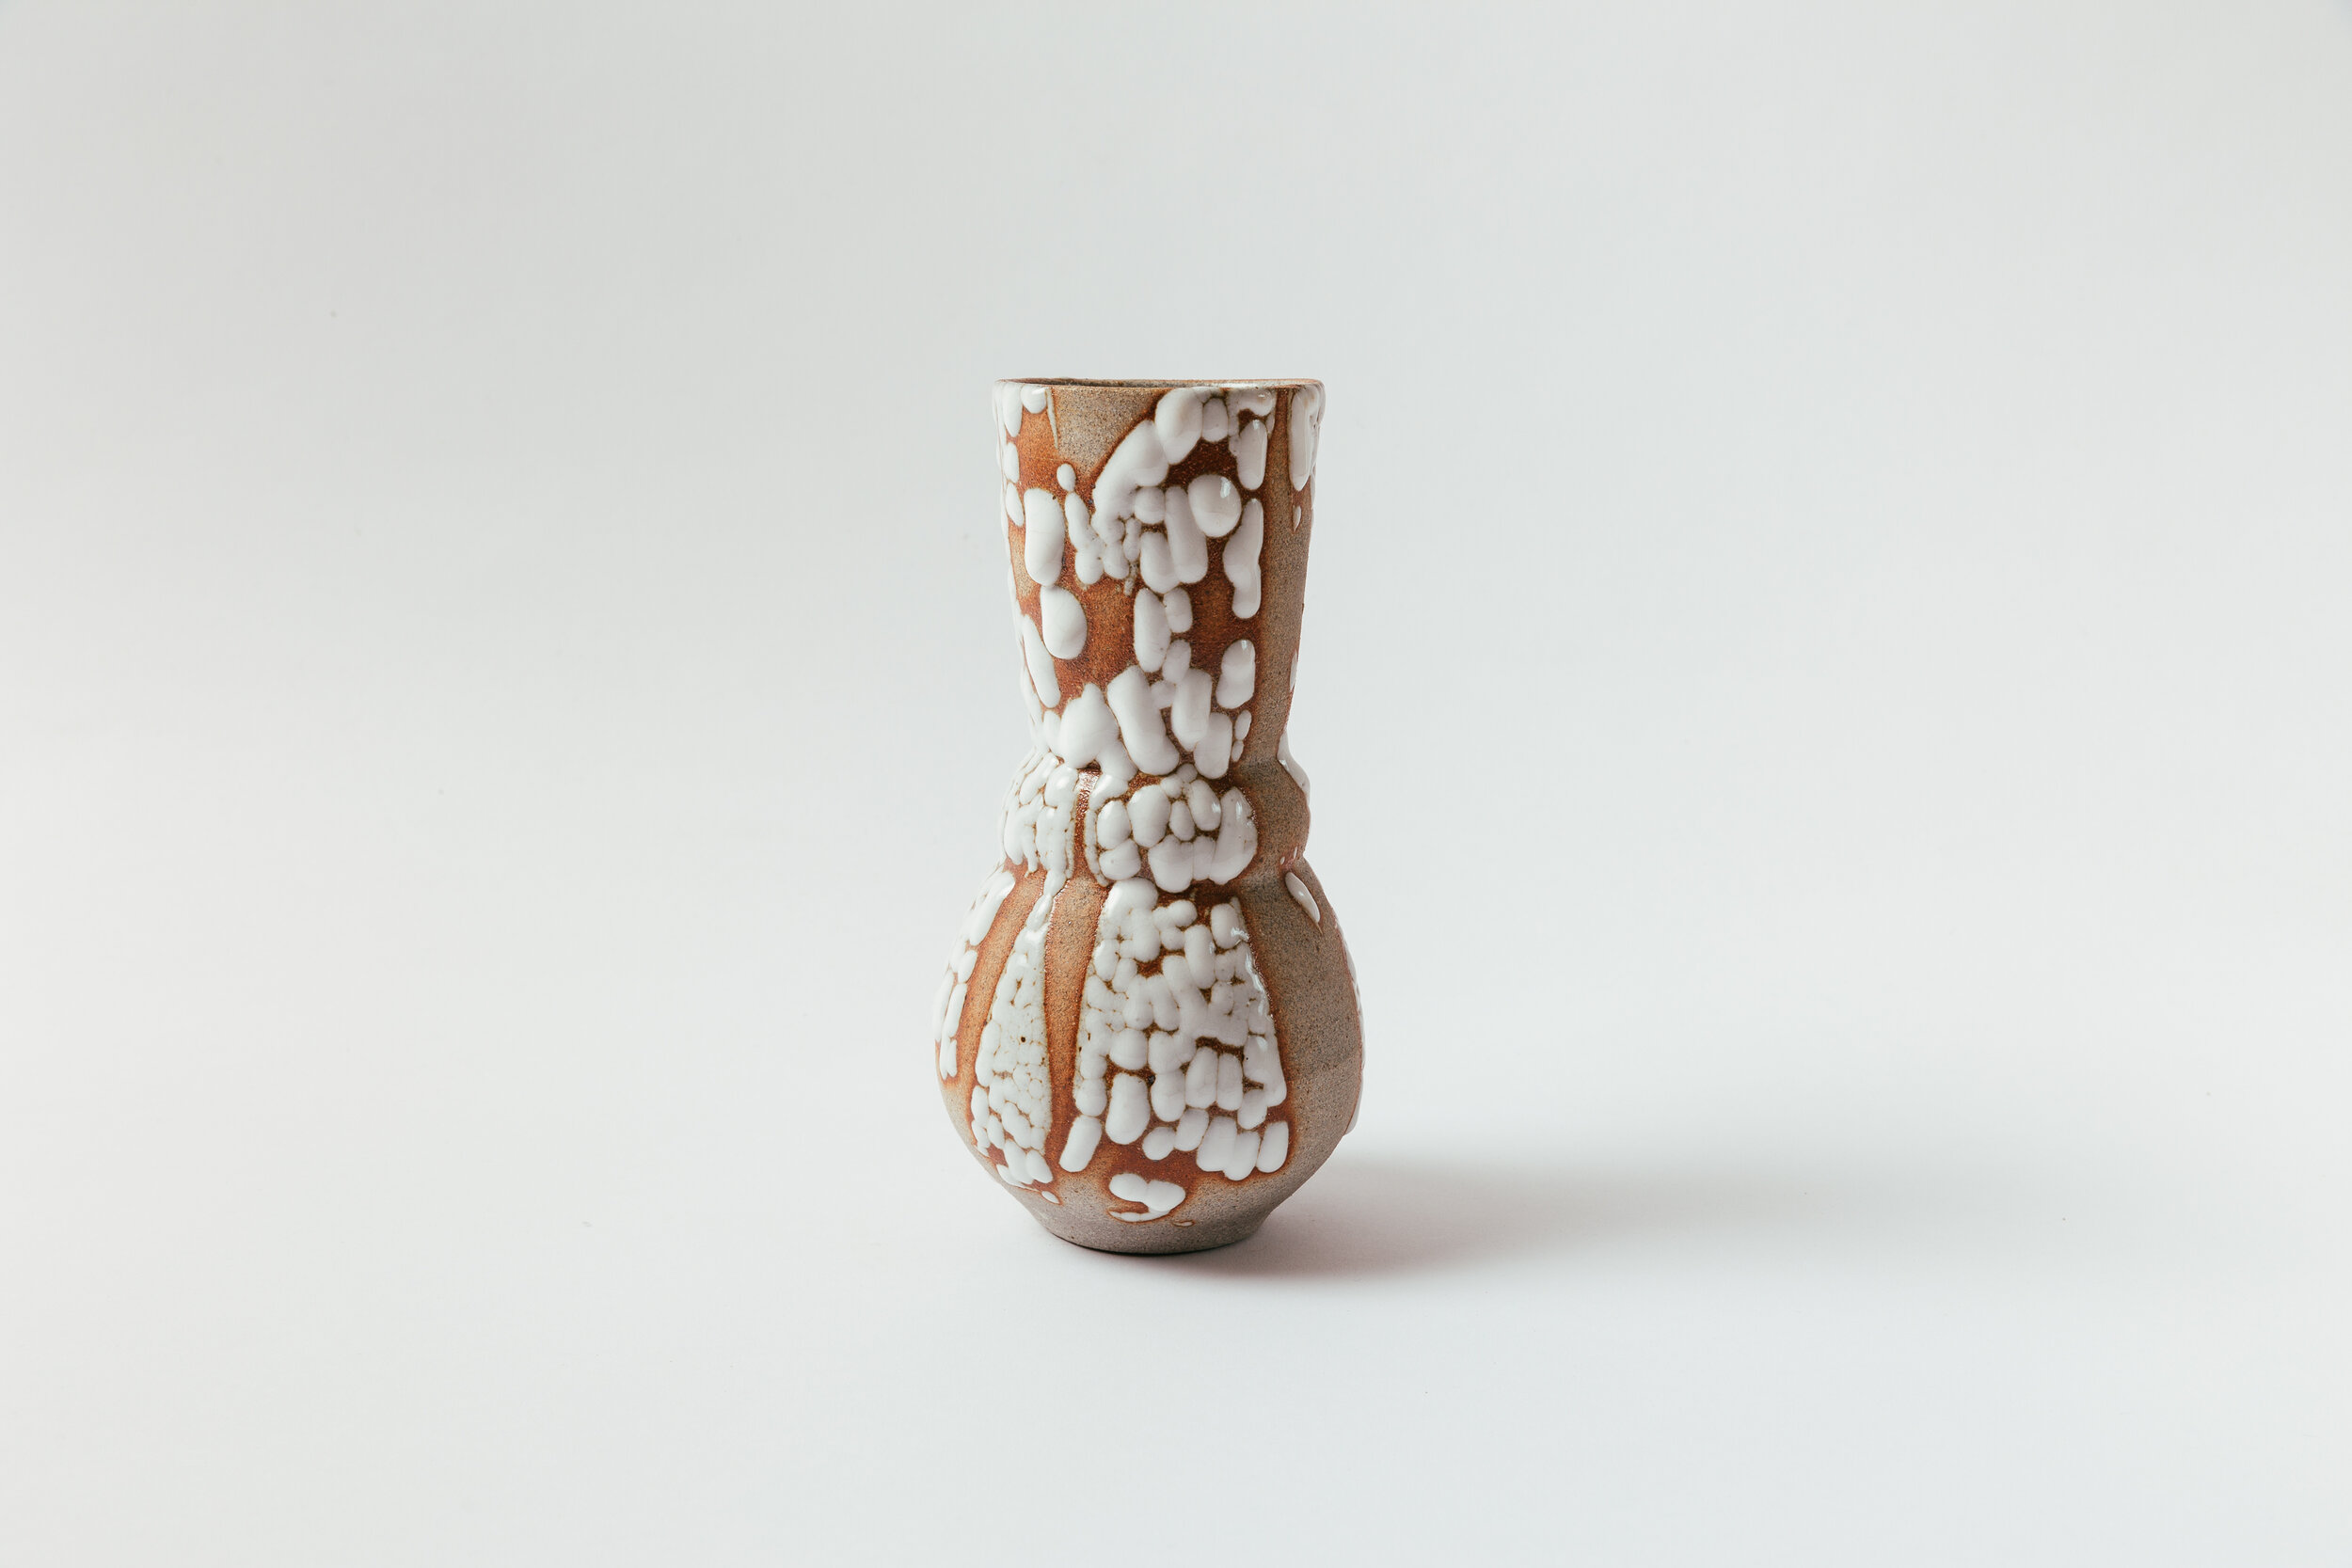  Marshmallow Puff Vase, February 2018. 